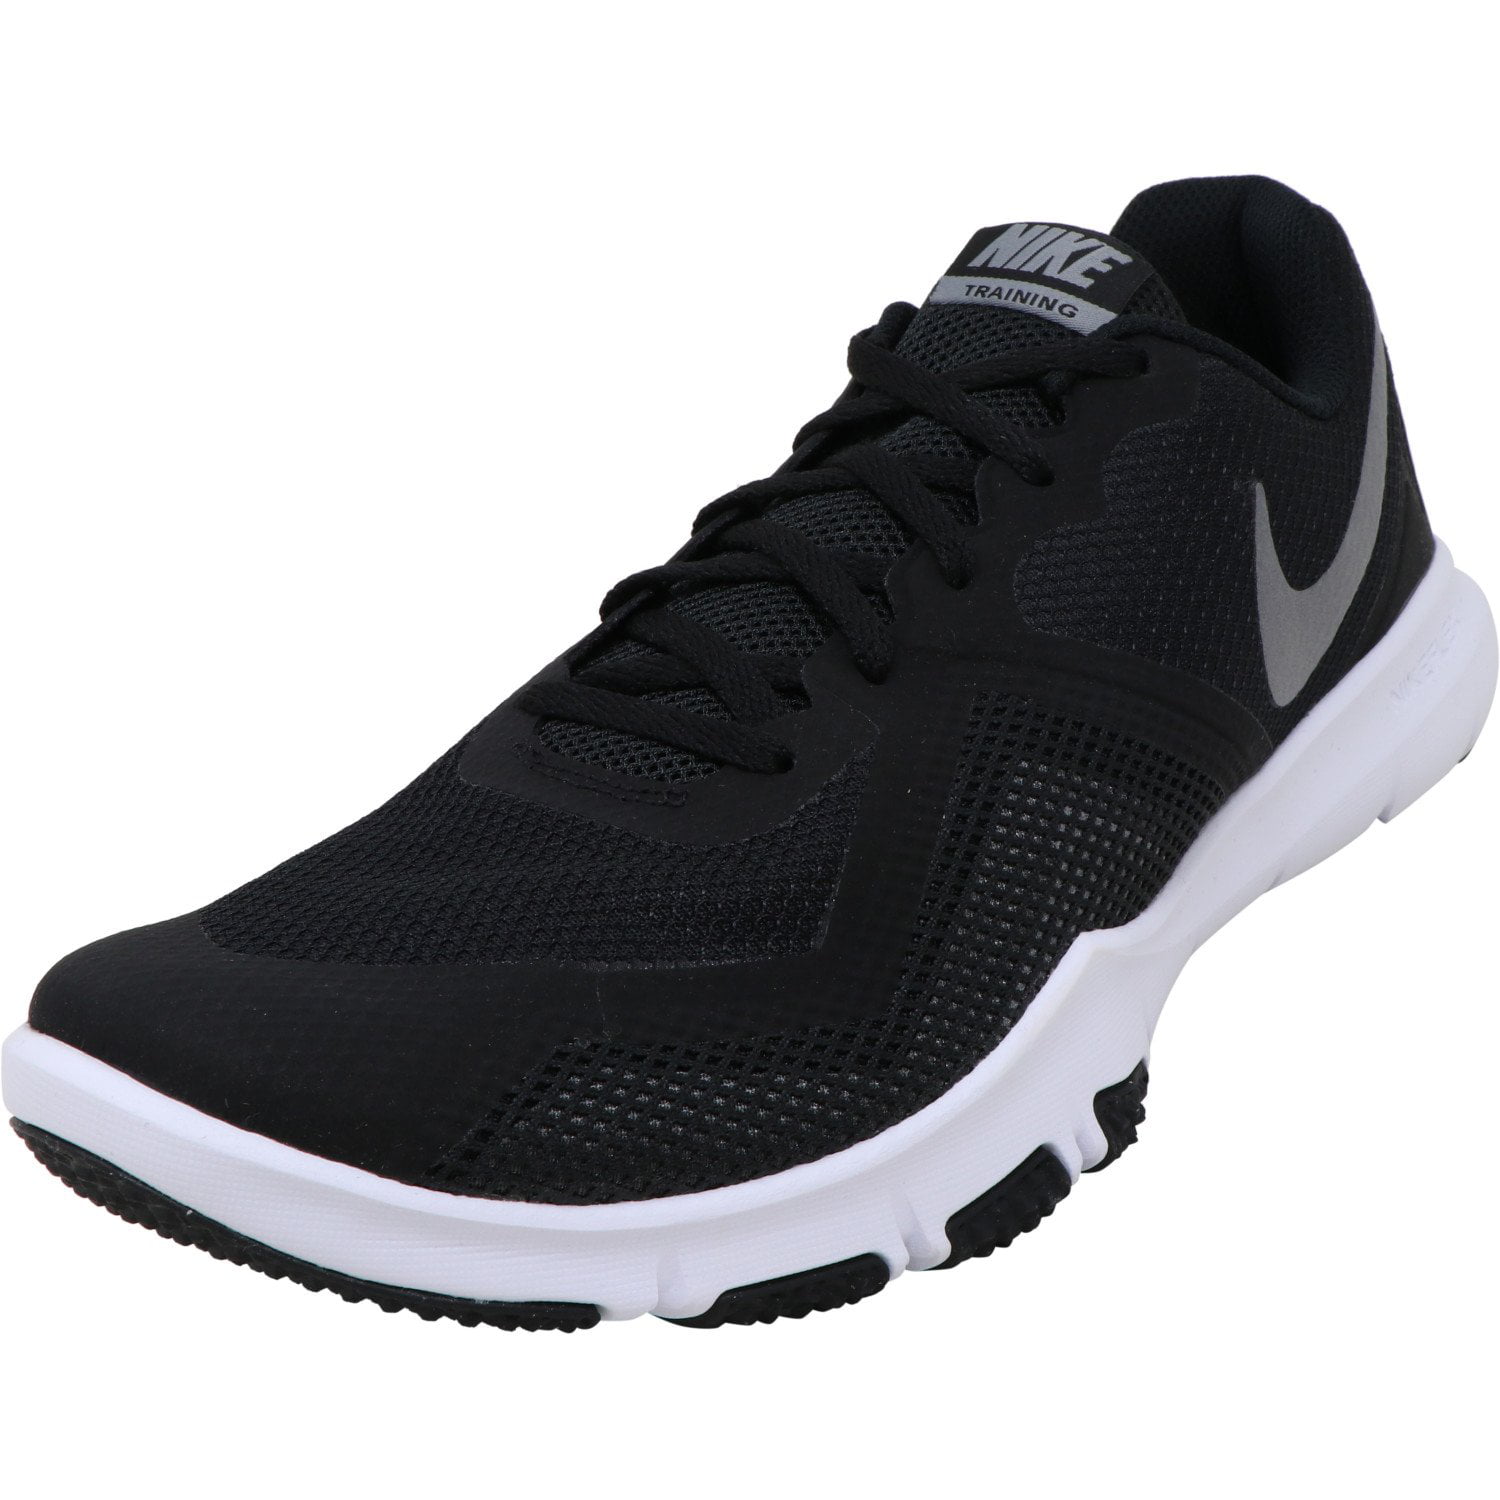 Nike - Nike Men's Flex Control Ii Black / Metallic Cool Grey Ankle-High ...